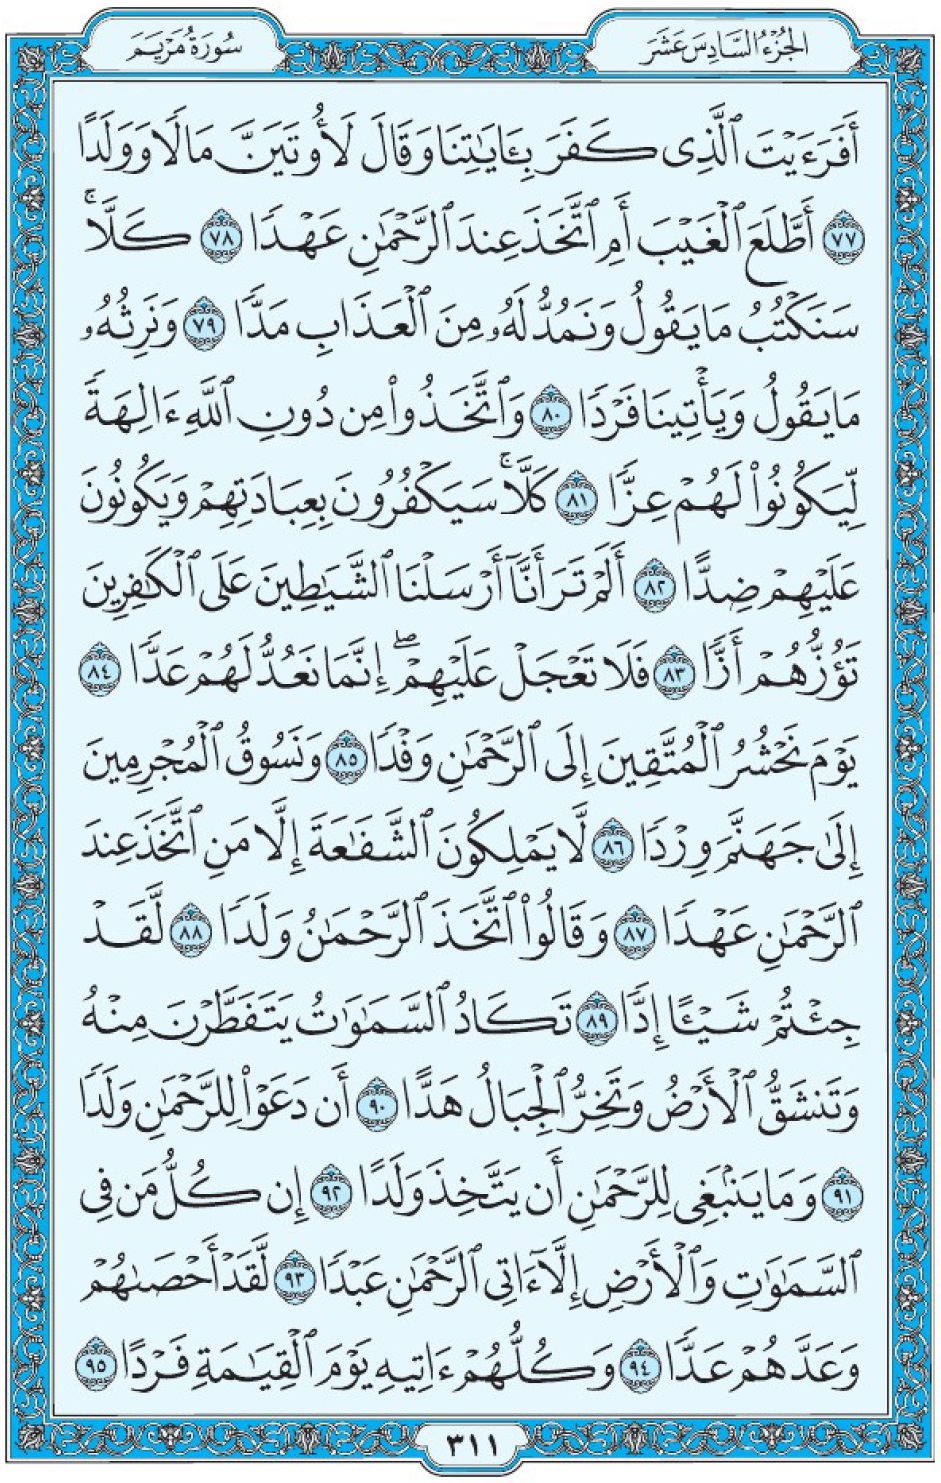 Коран Мединский мусхаф страница 311, Марьям, аят 77-95